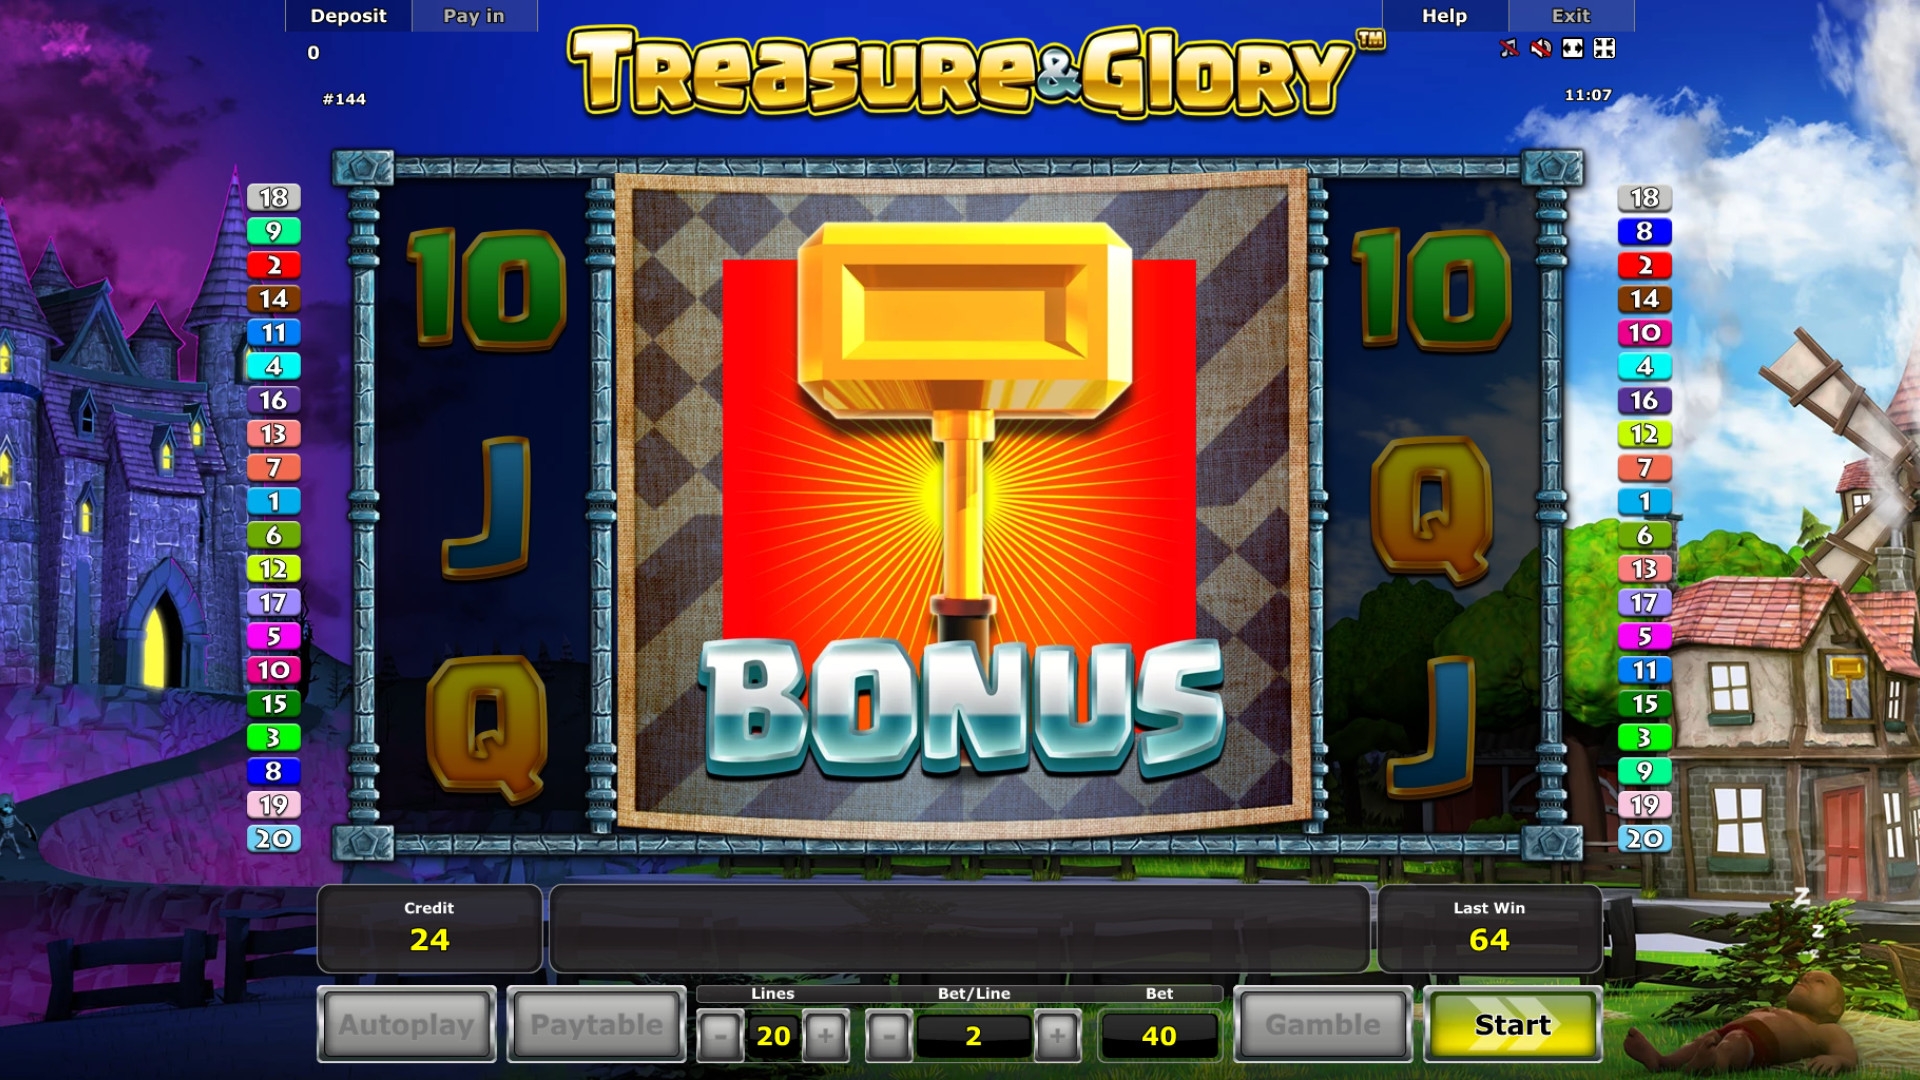 Treasure and Glory (Treasure and Glory) from category Slots